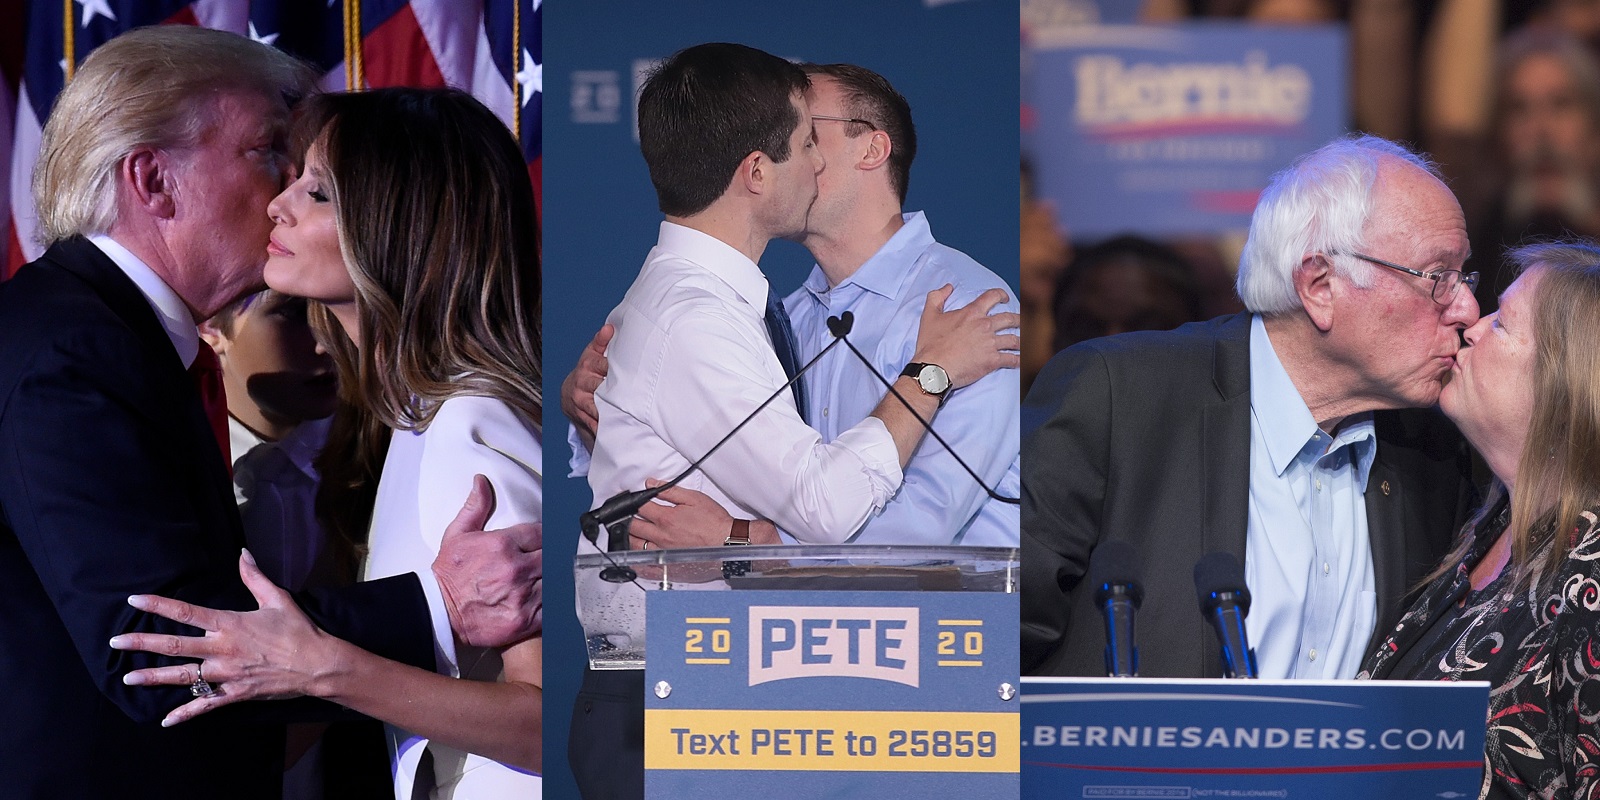 Republican pundit: Pete Buttigieg 'made gayness an issue' by kissing husband1600 x 800